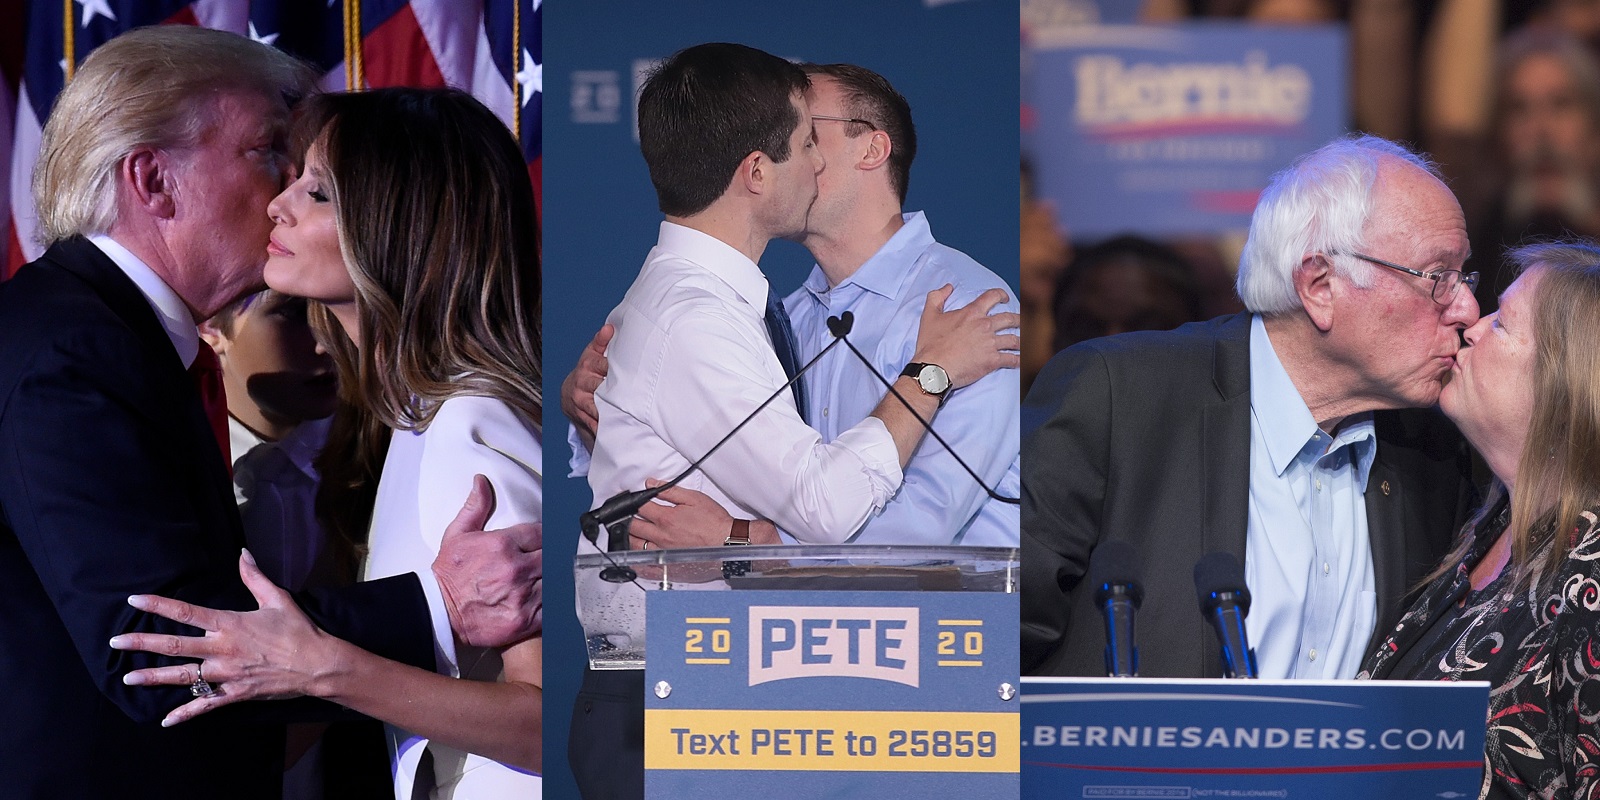 Republican pundit: Pete Buttigieg 'made gayness an issue' by kissing husband1600 x 800